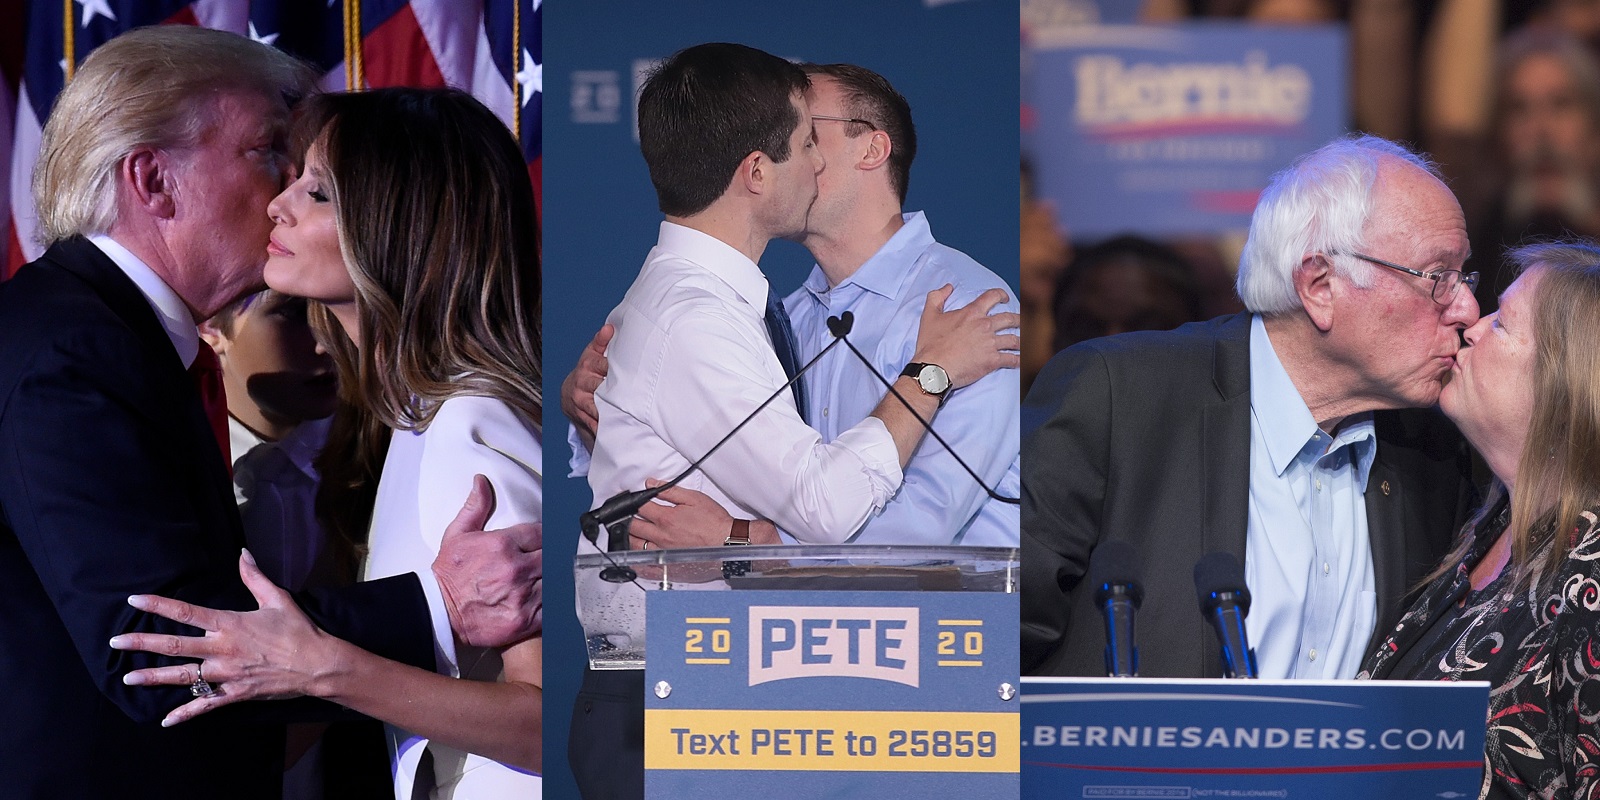 Republican pundit: Pete Buttigieg 'made gayness an issue' by kissing husband1600 x 800